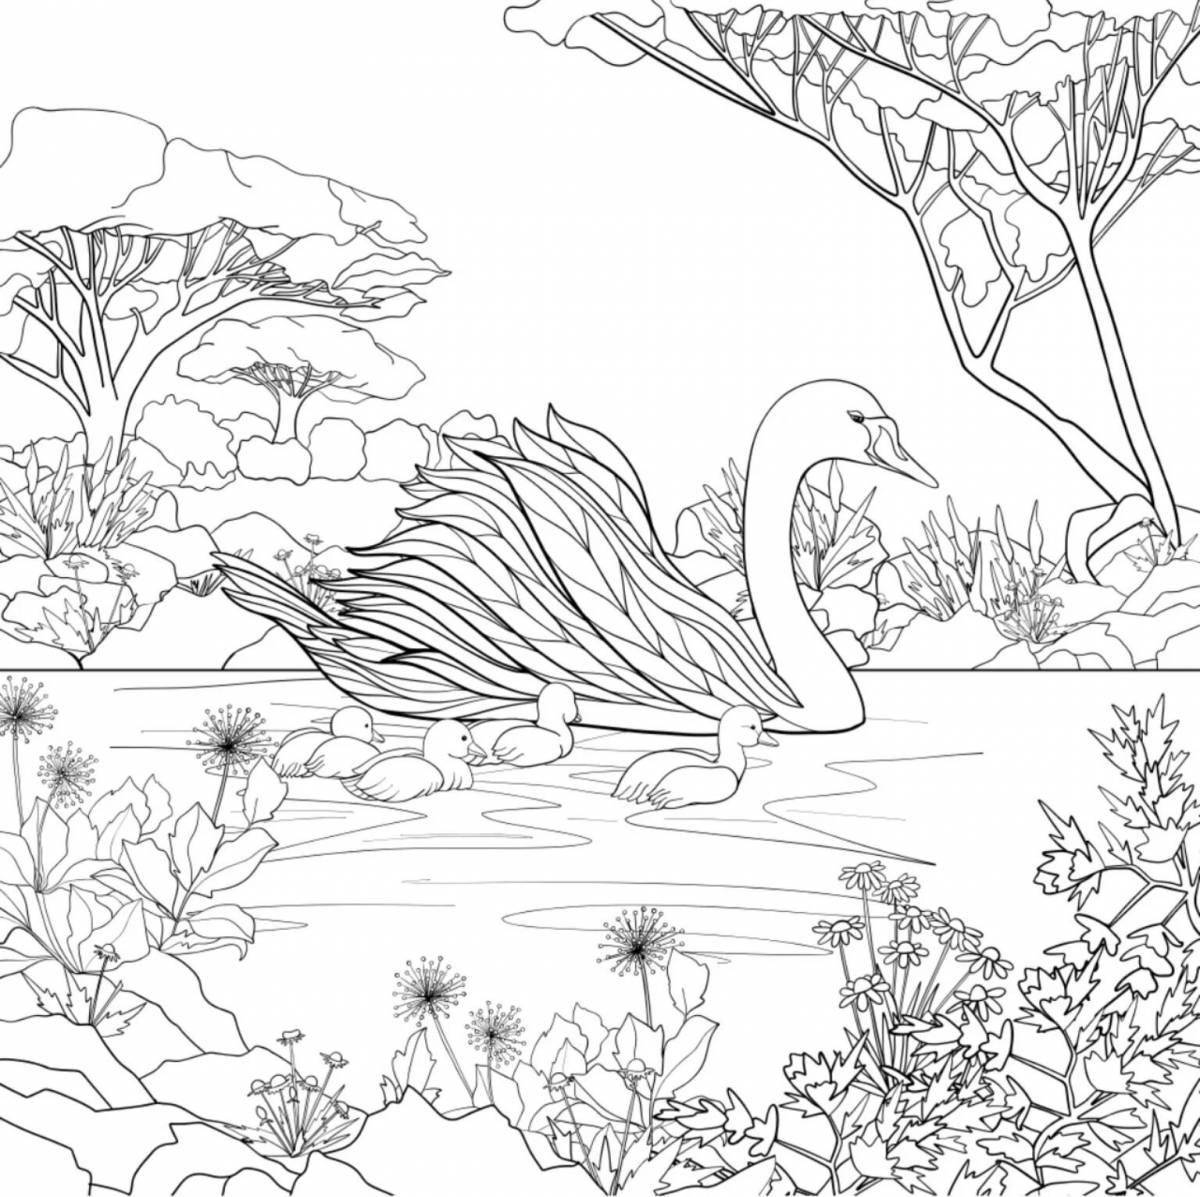 Inspirational swan antistress coloring book